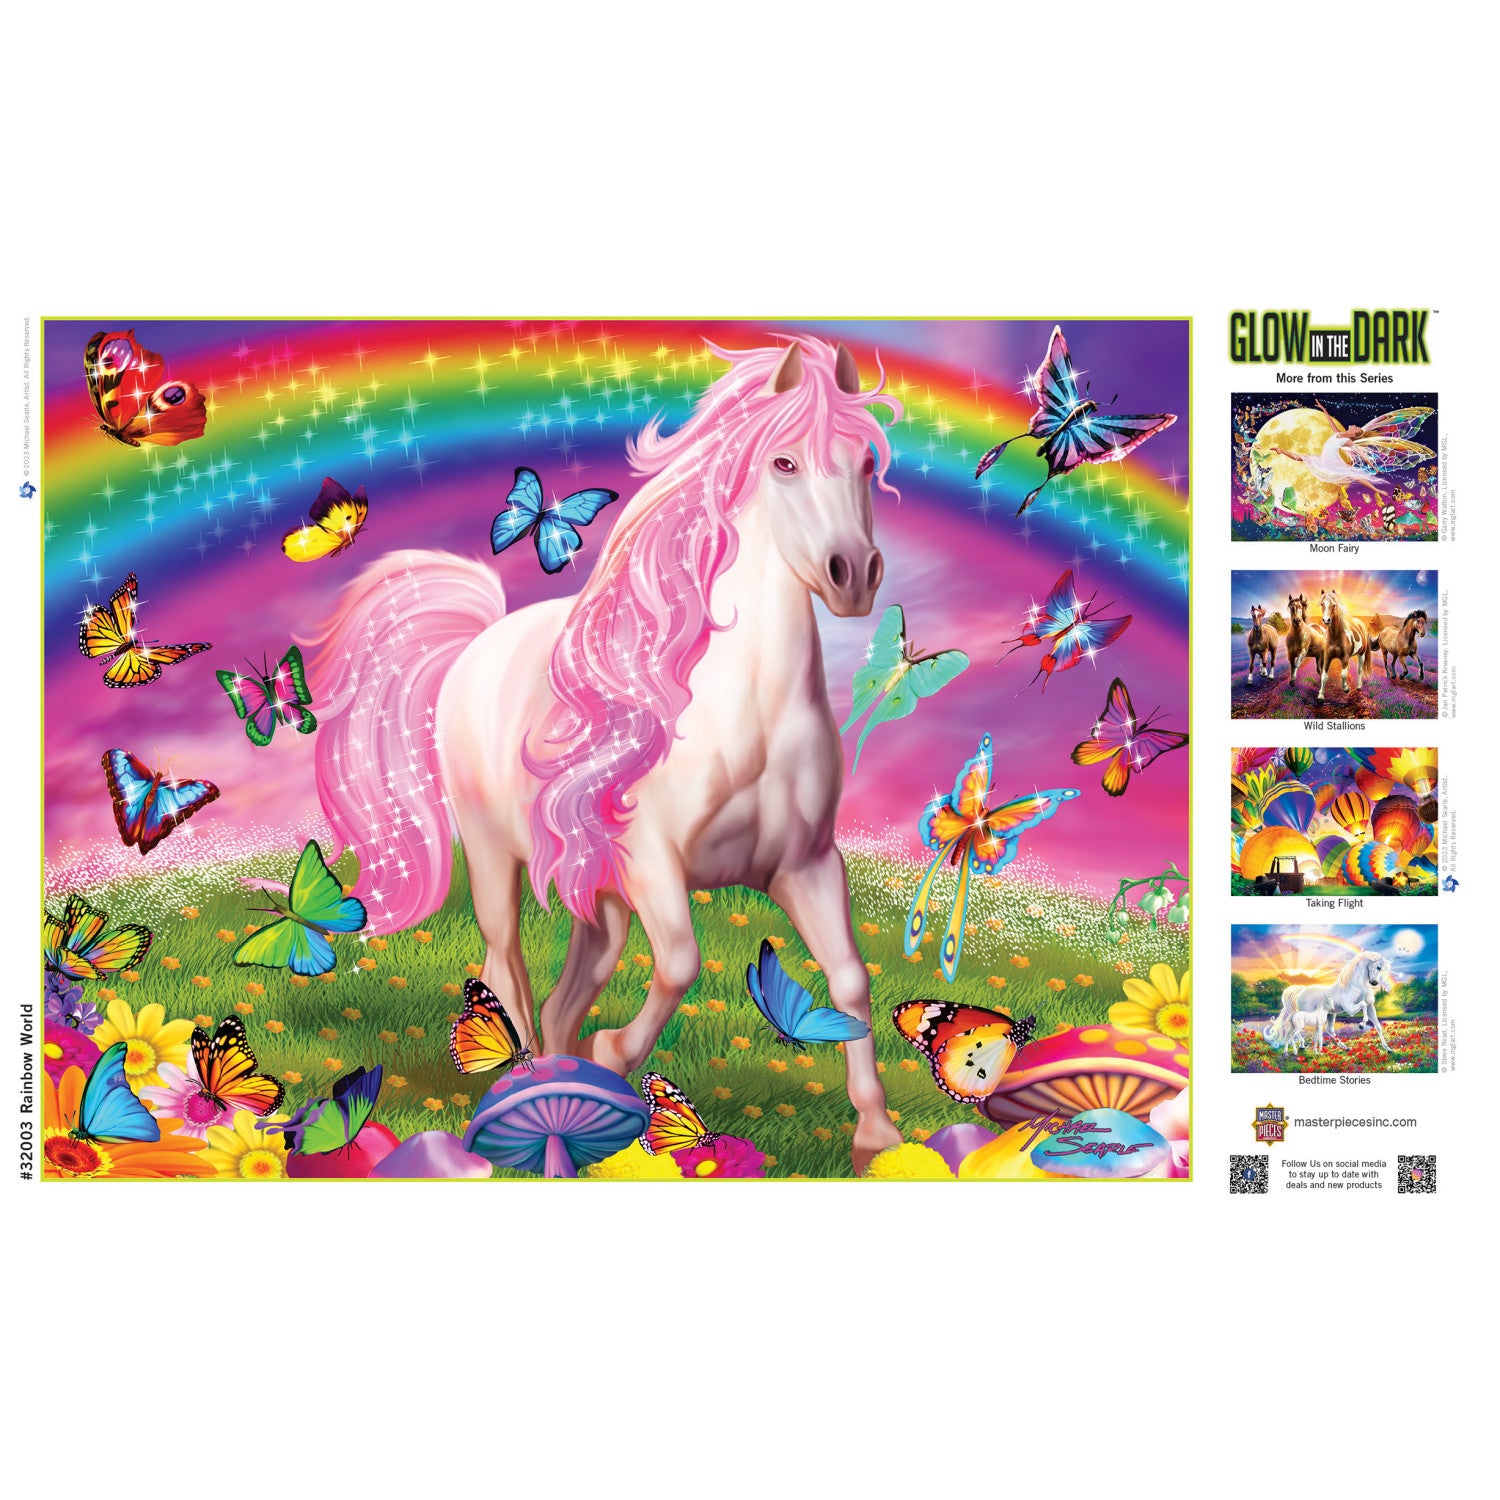 Glow in the Dark - Rainbow World 300 Piece EZ Grip Jigsaw Puzzle